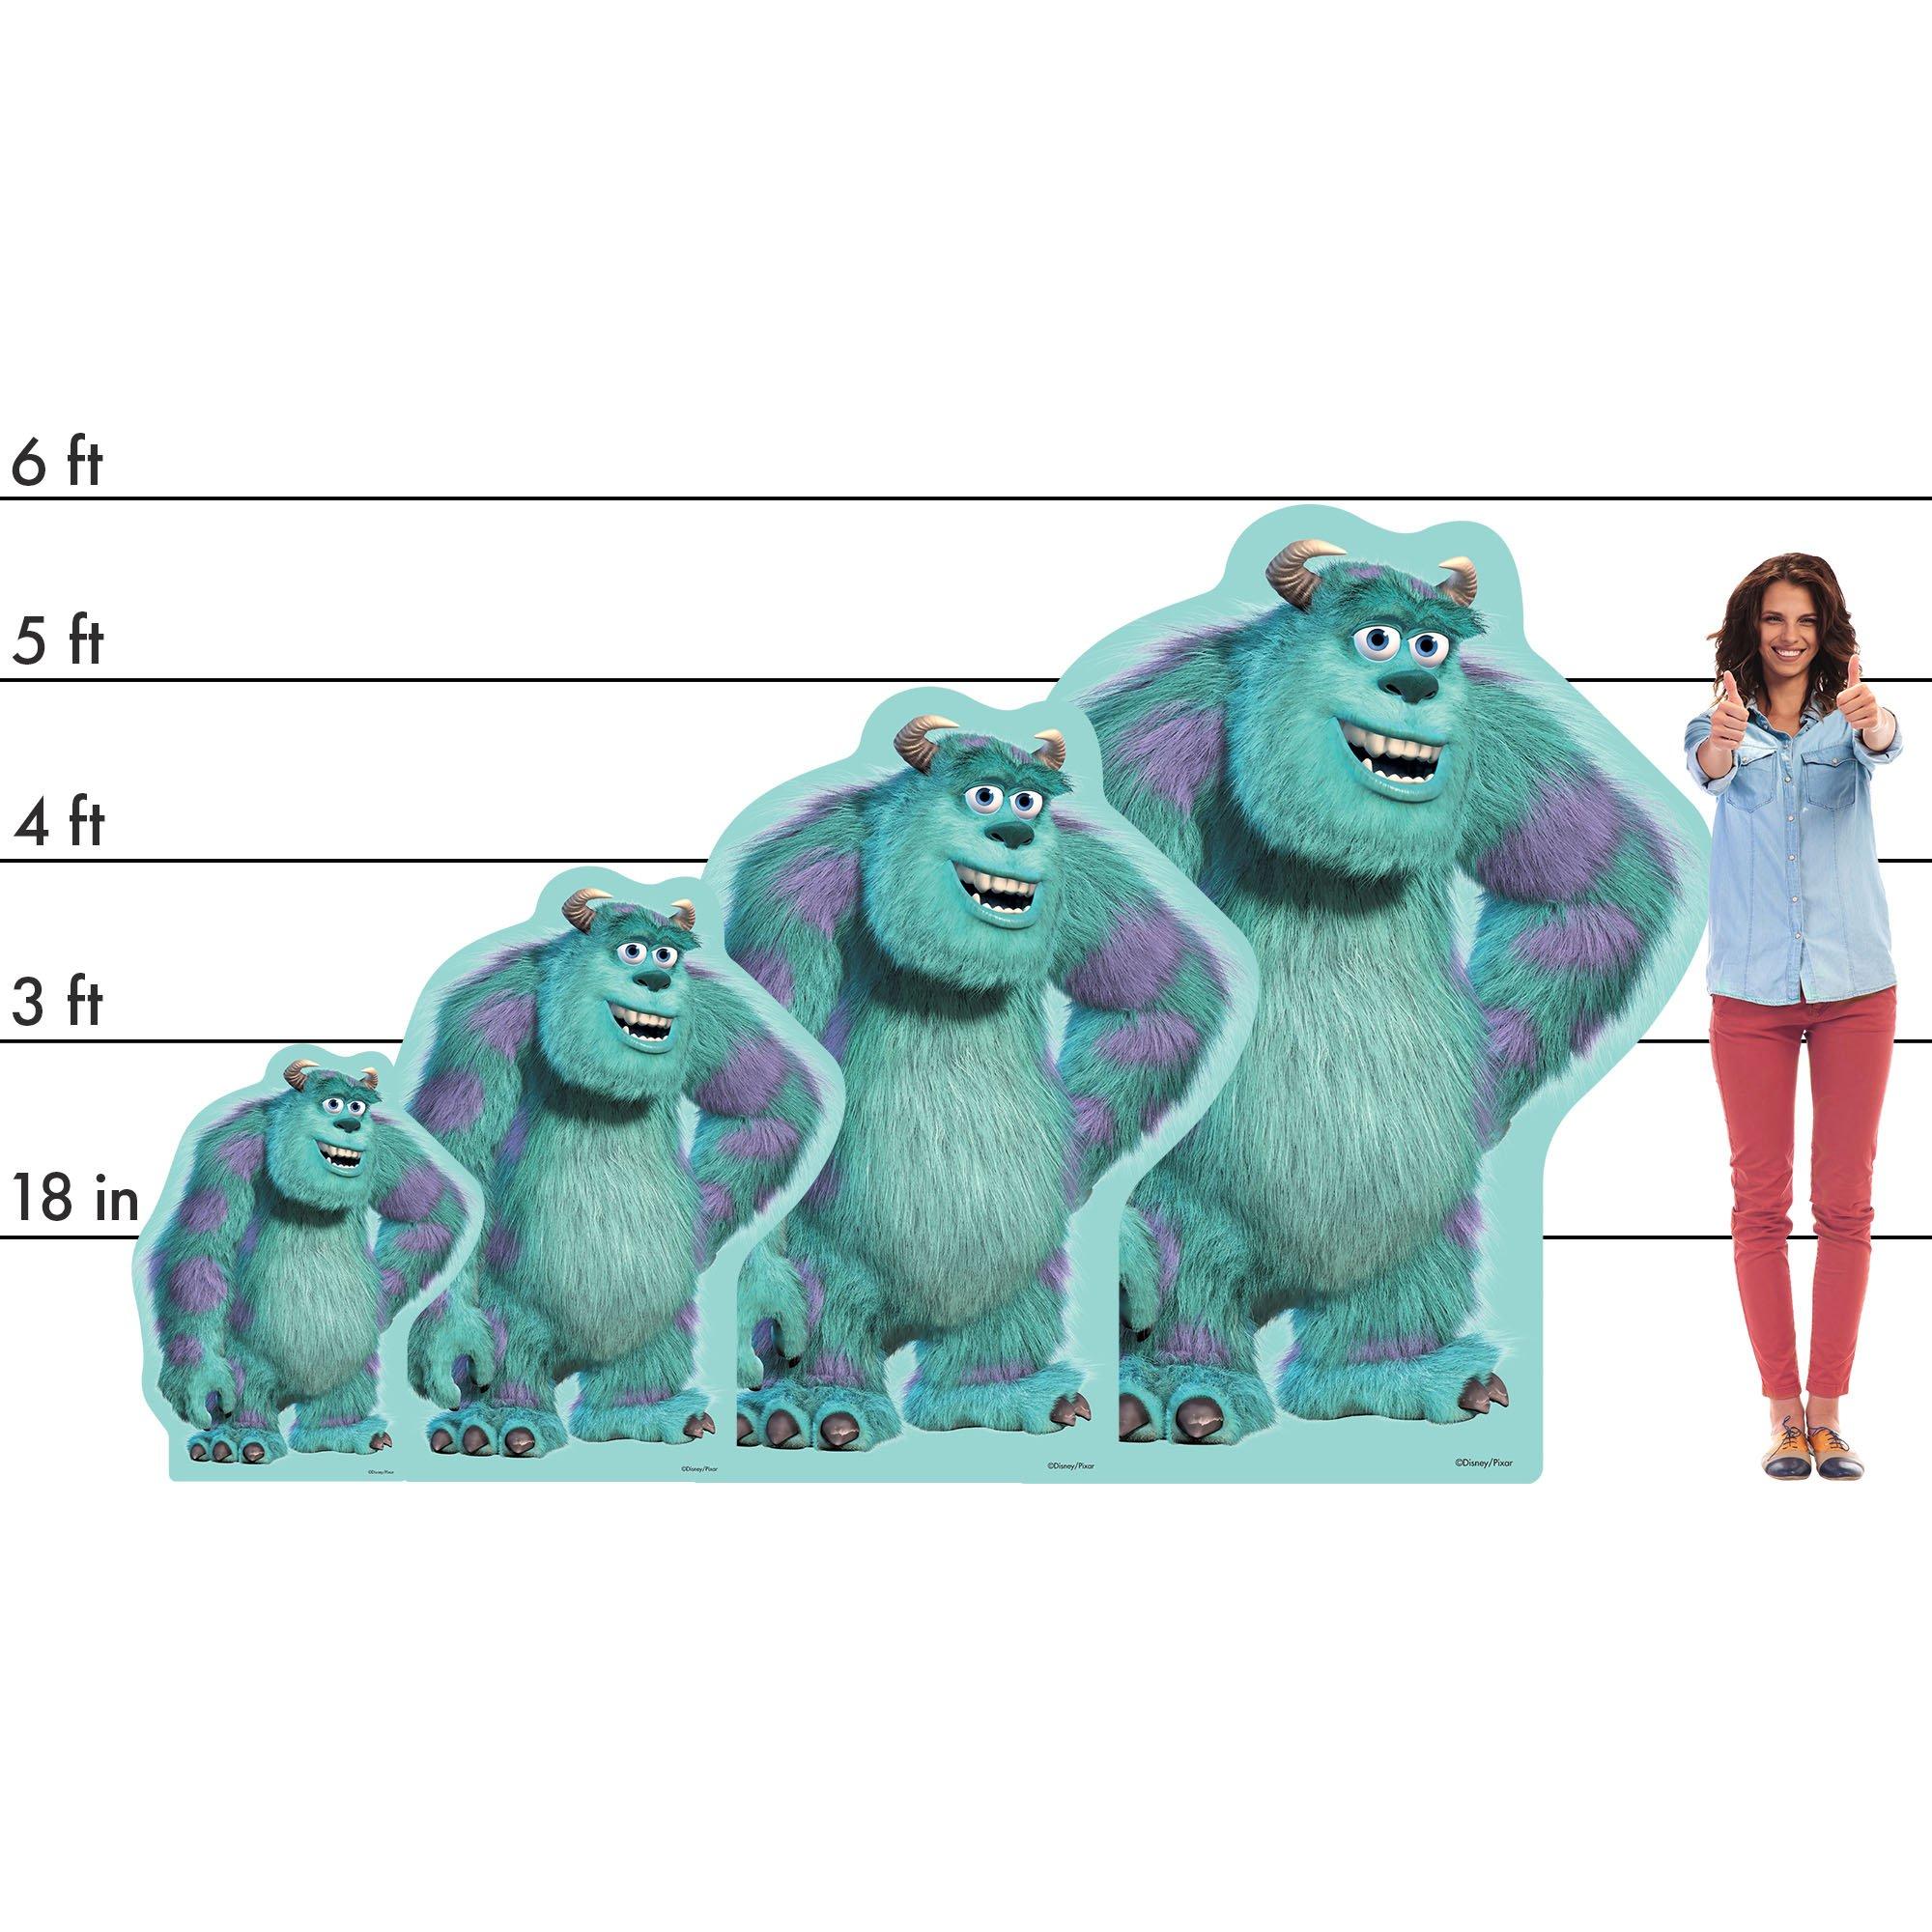 Sulley Cardboard Cutout, 3ft - Pixar Monsters, Inc.